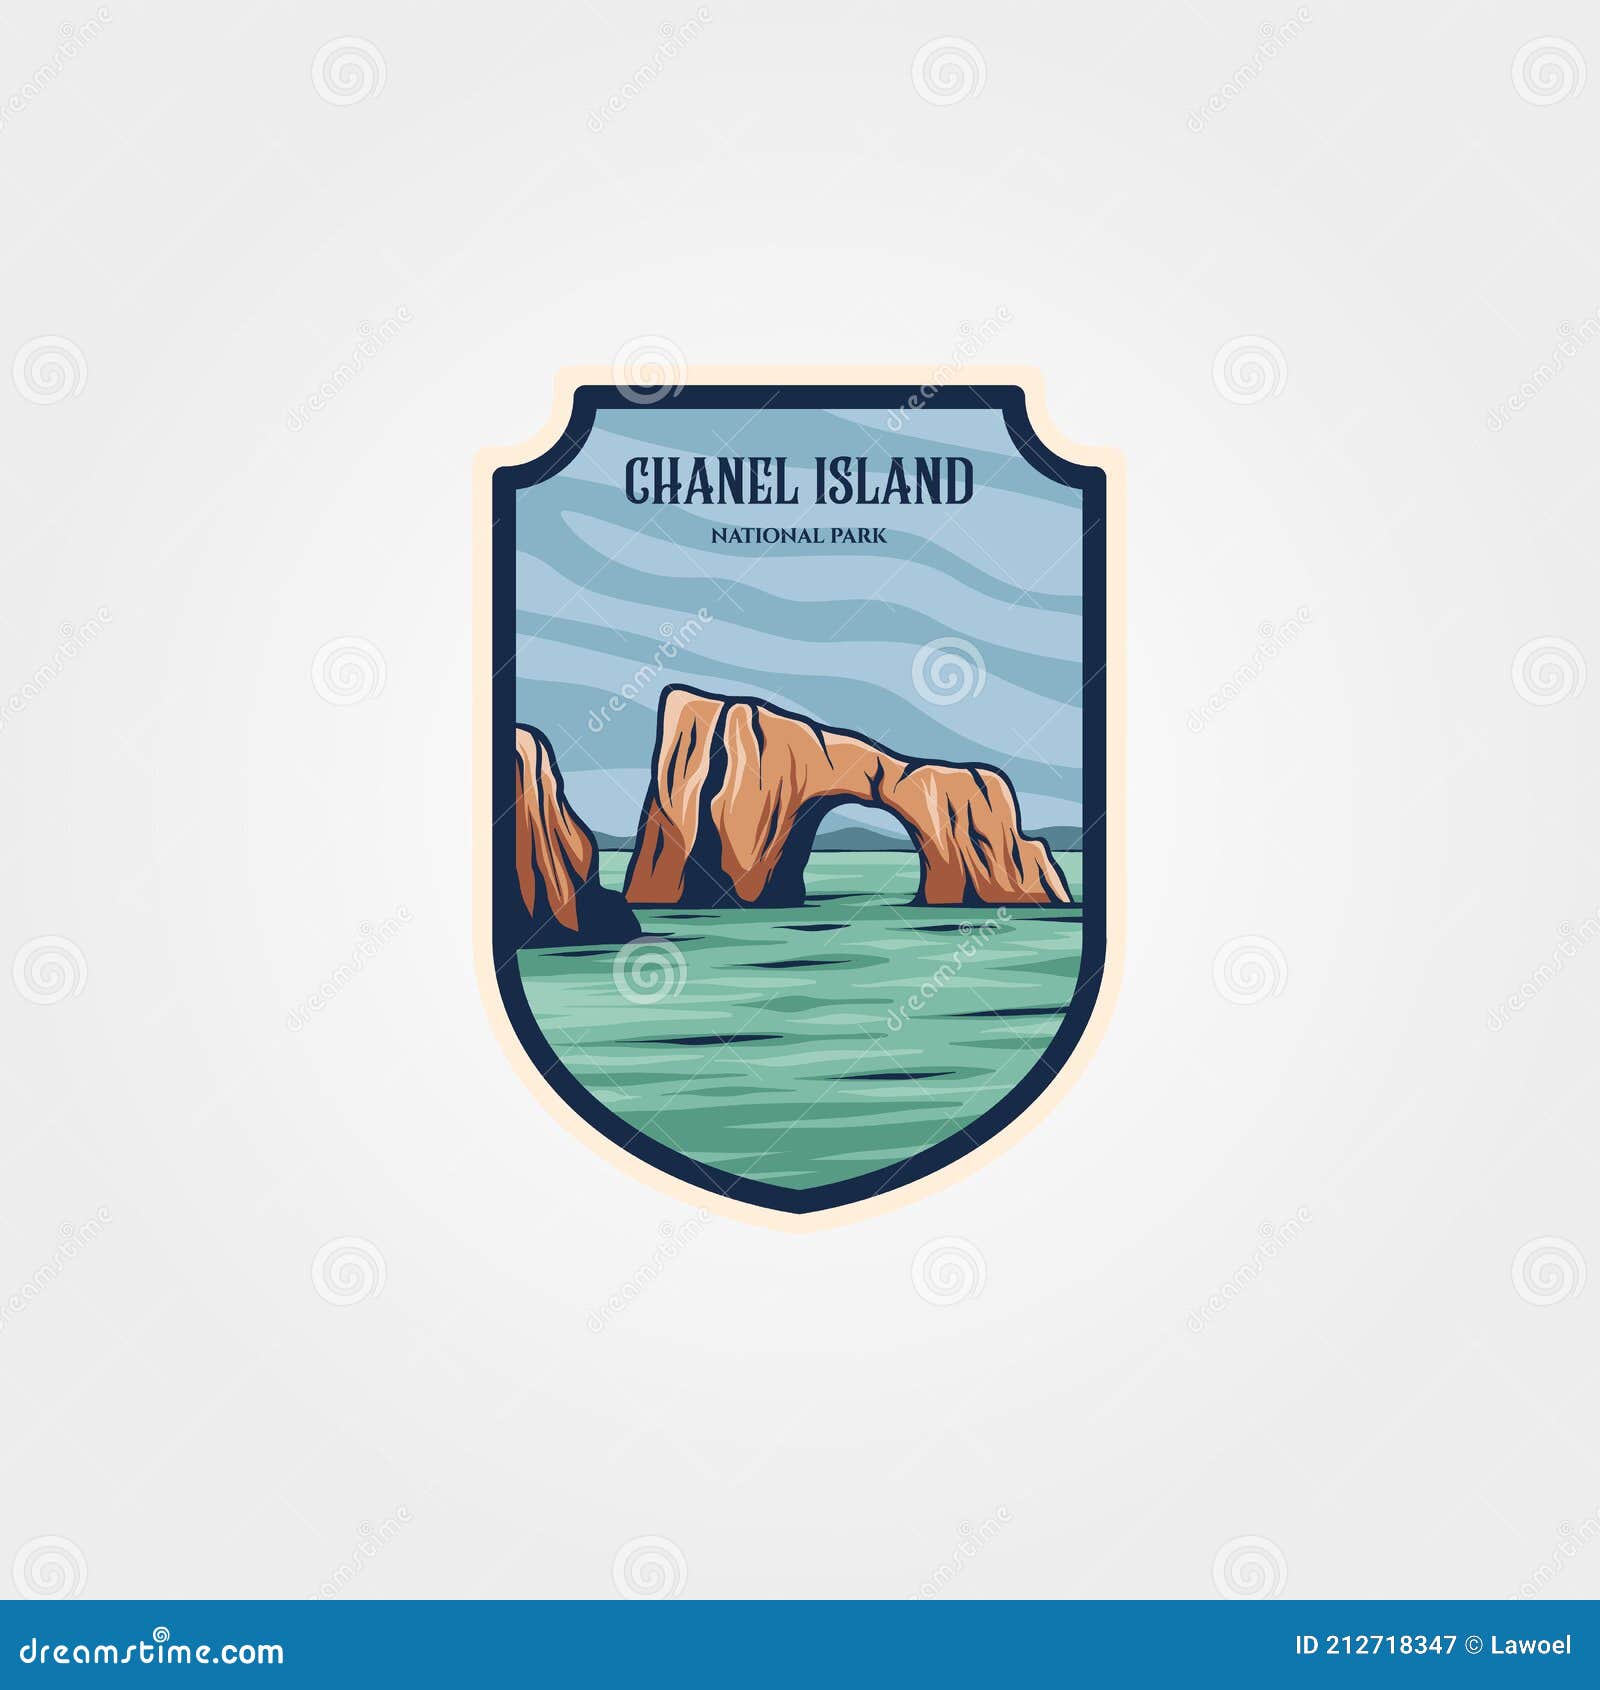 Chanel Island National Park Logo Patch Vector Design, Travel Print